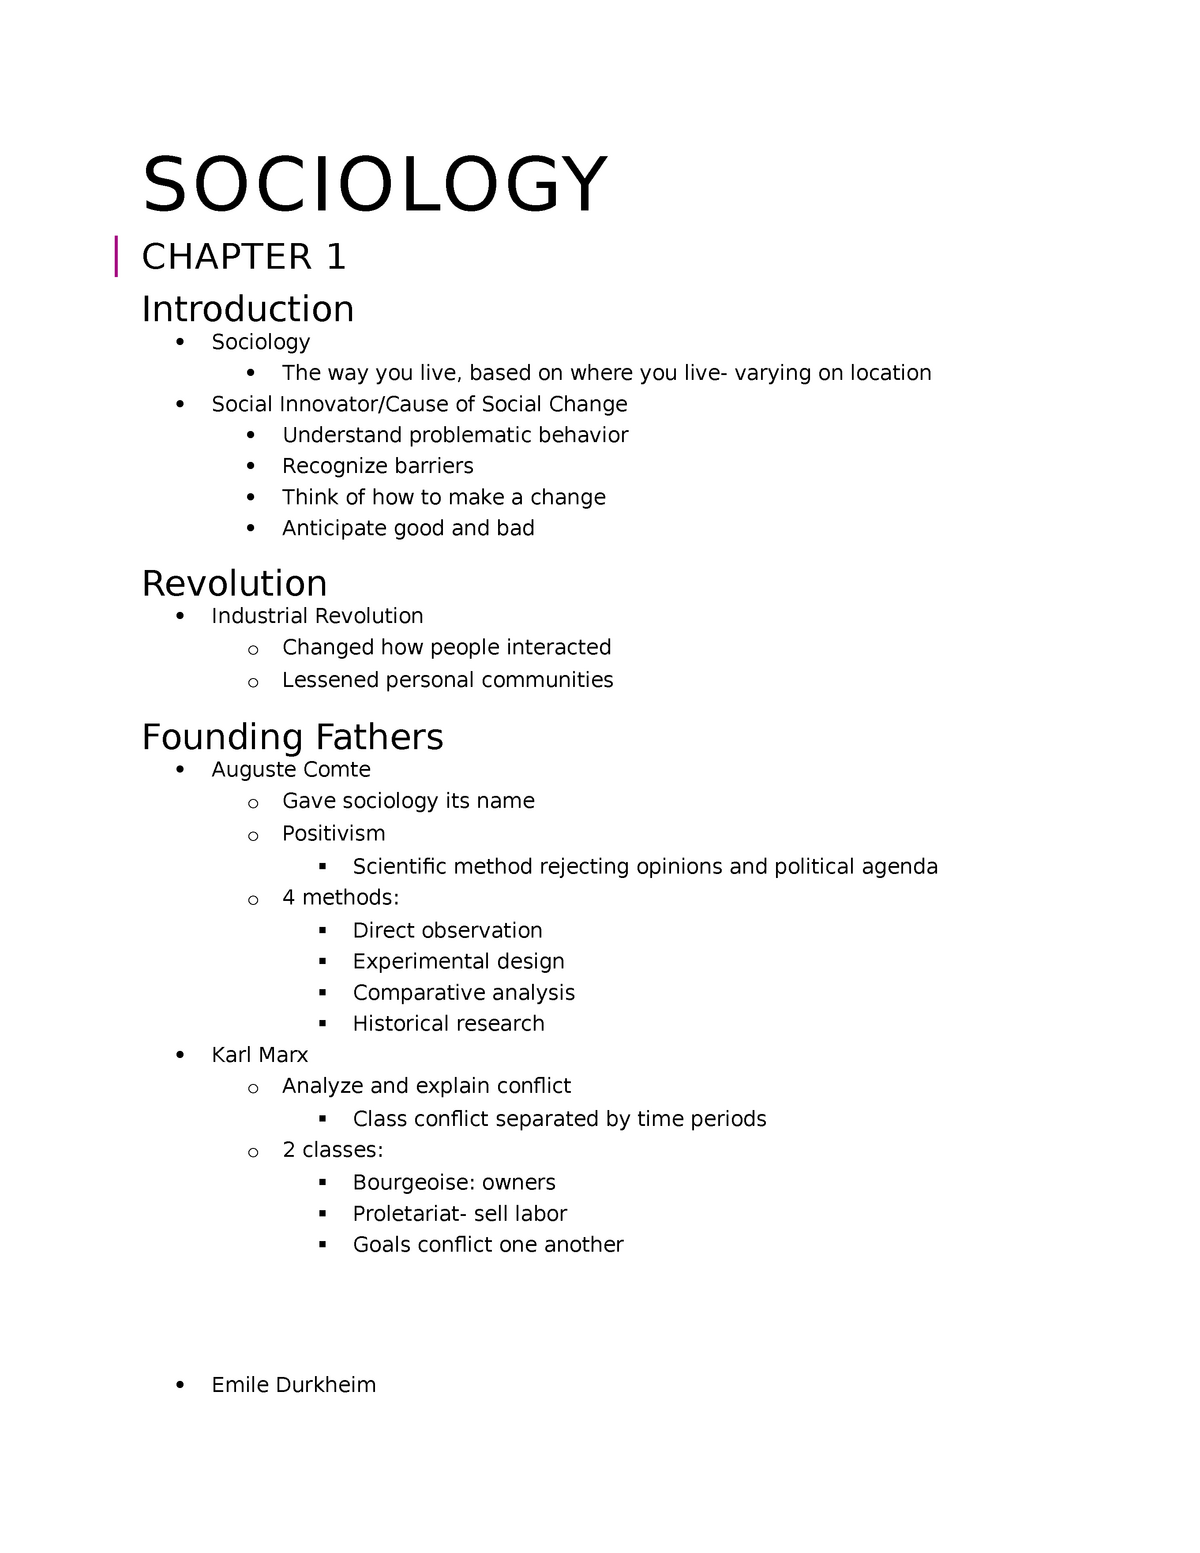 sociology degree dissertation examples